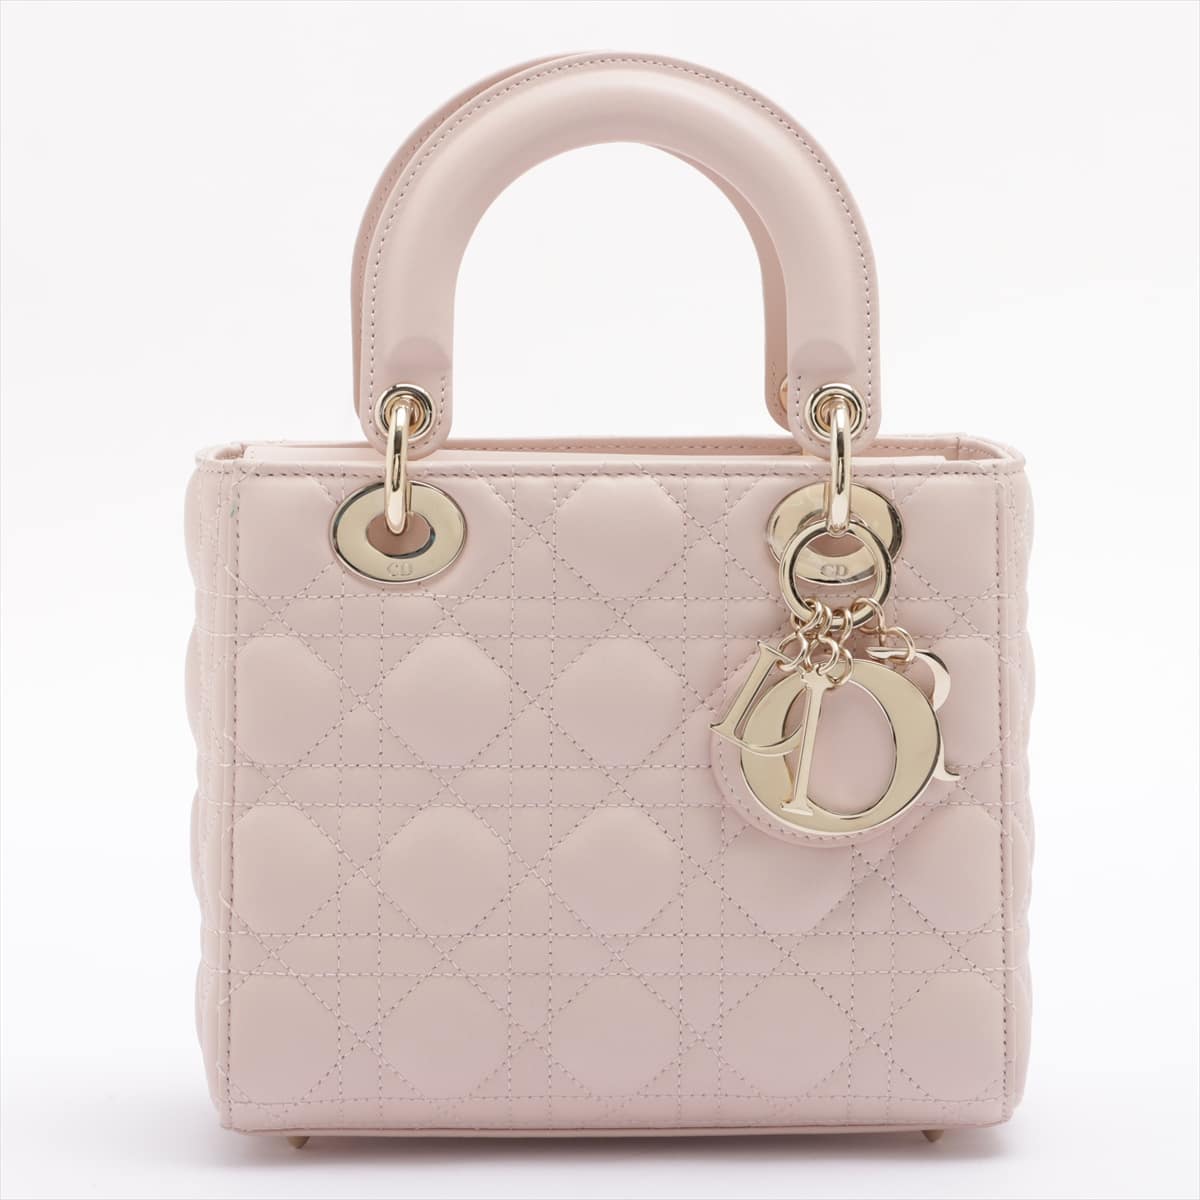 Christian Dior Lady Dior Cannage Cannage Leather 2way handbag Pink